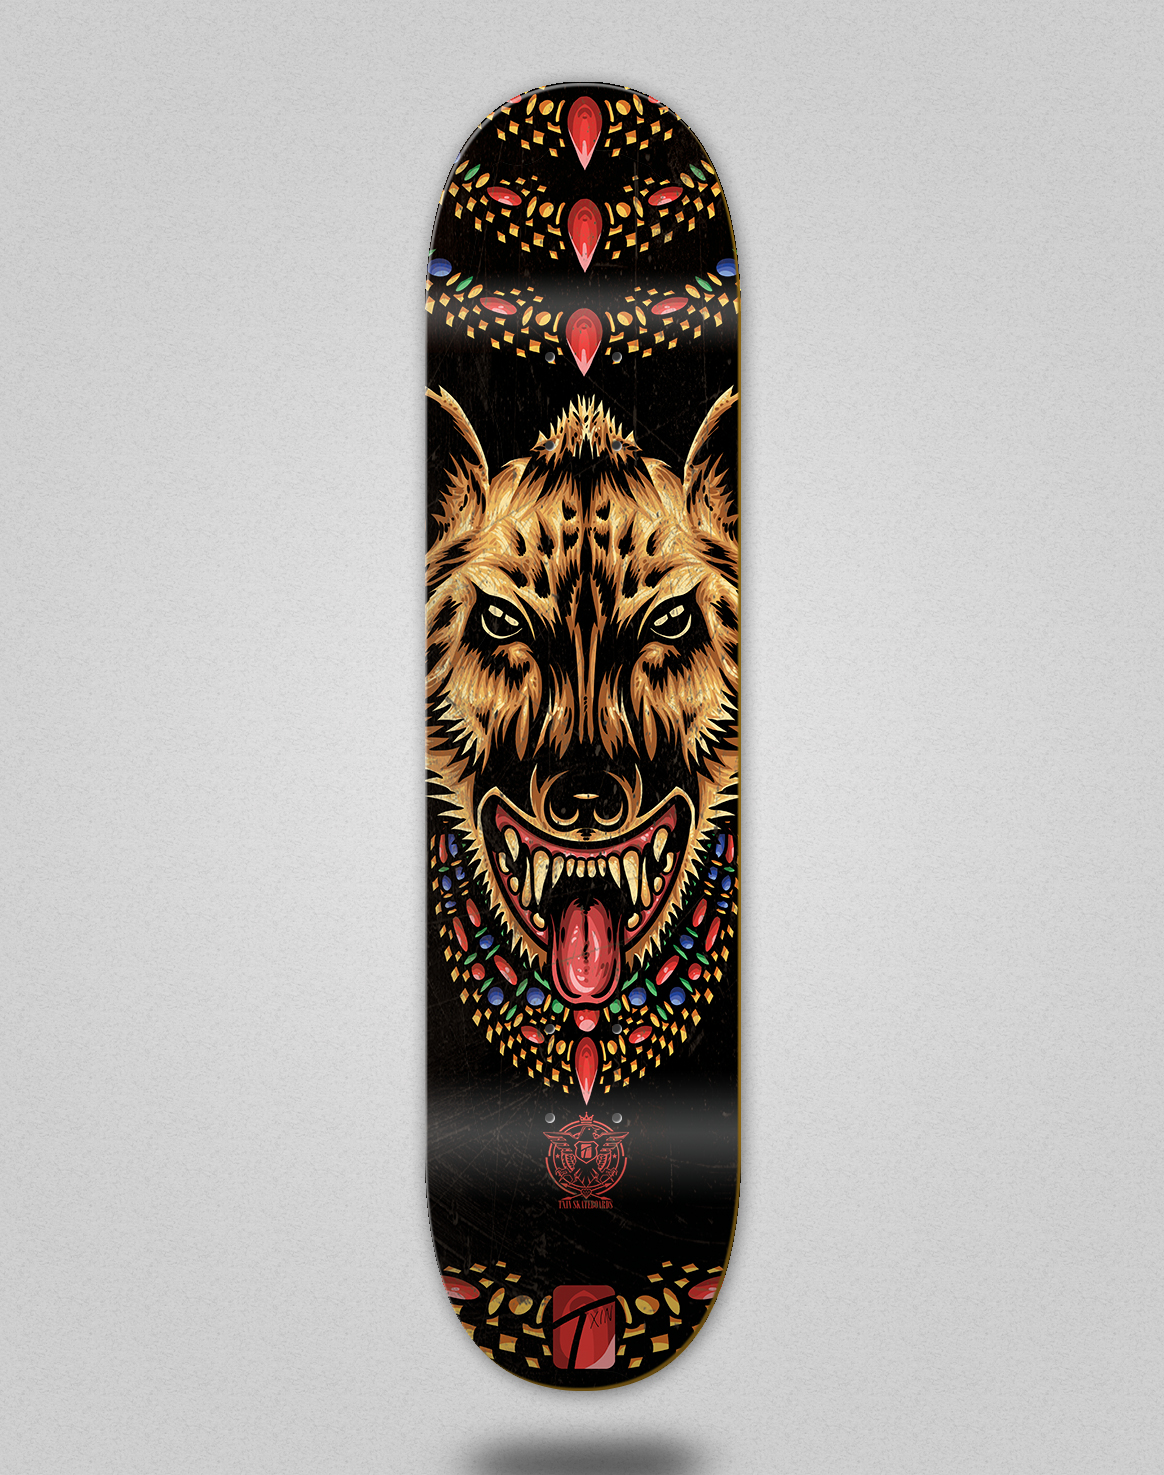 Txin skateboard deck – Hiena